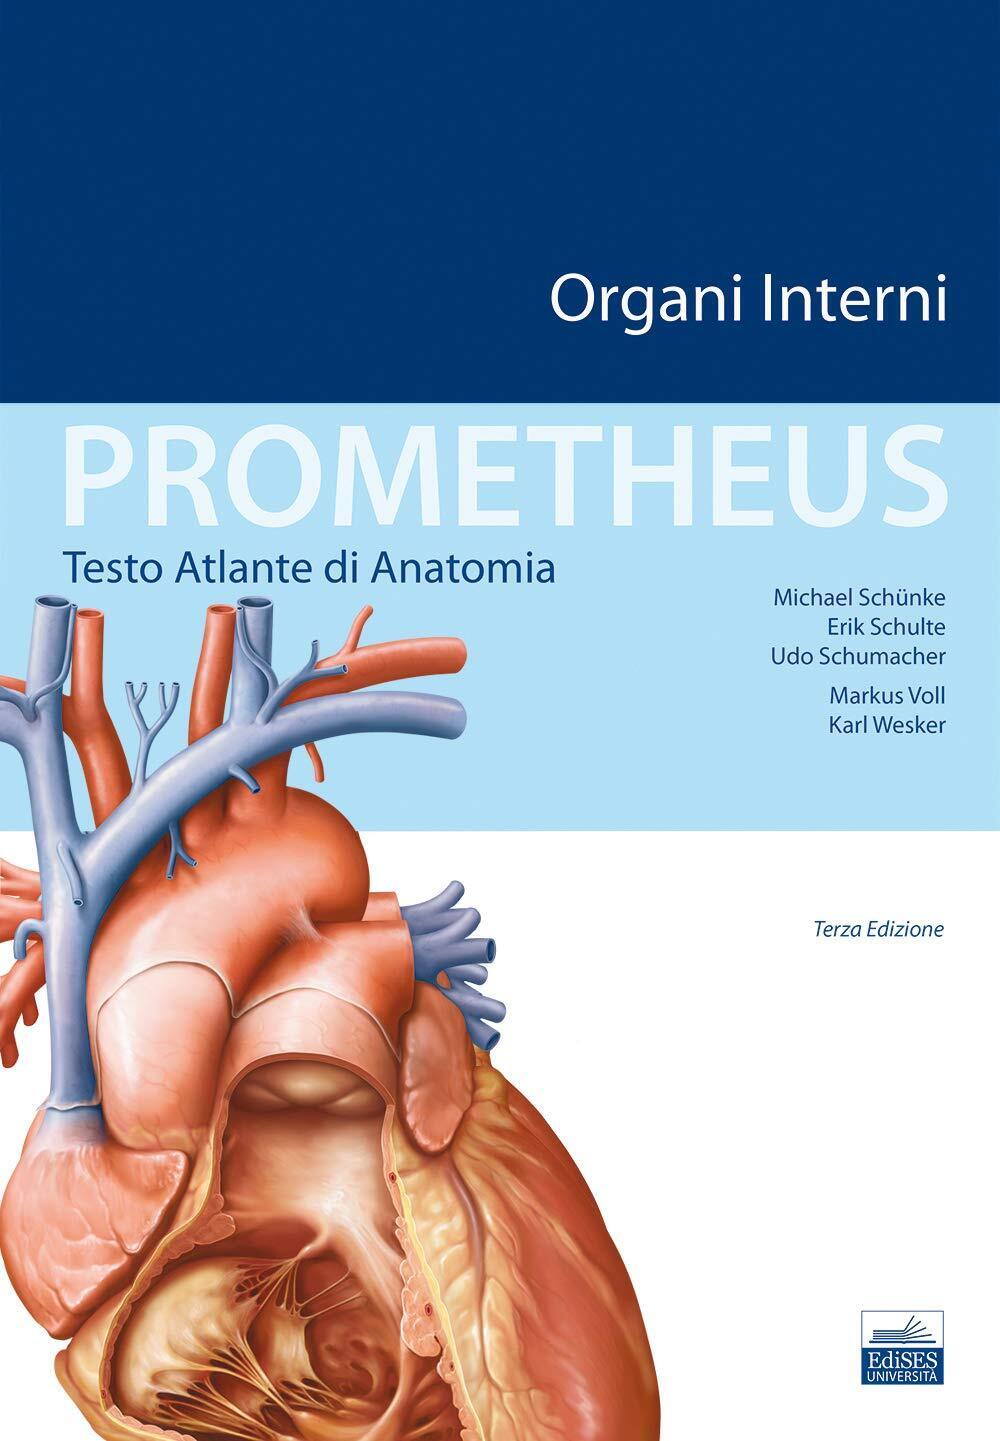 Prometheus. Testo atlante di anatomia. Organi interni - Edises, 2020